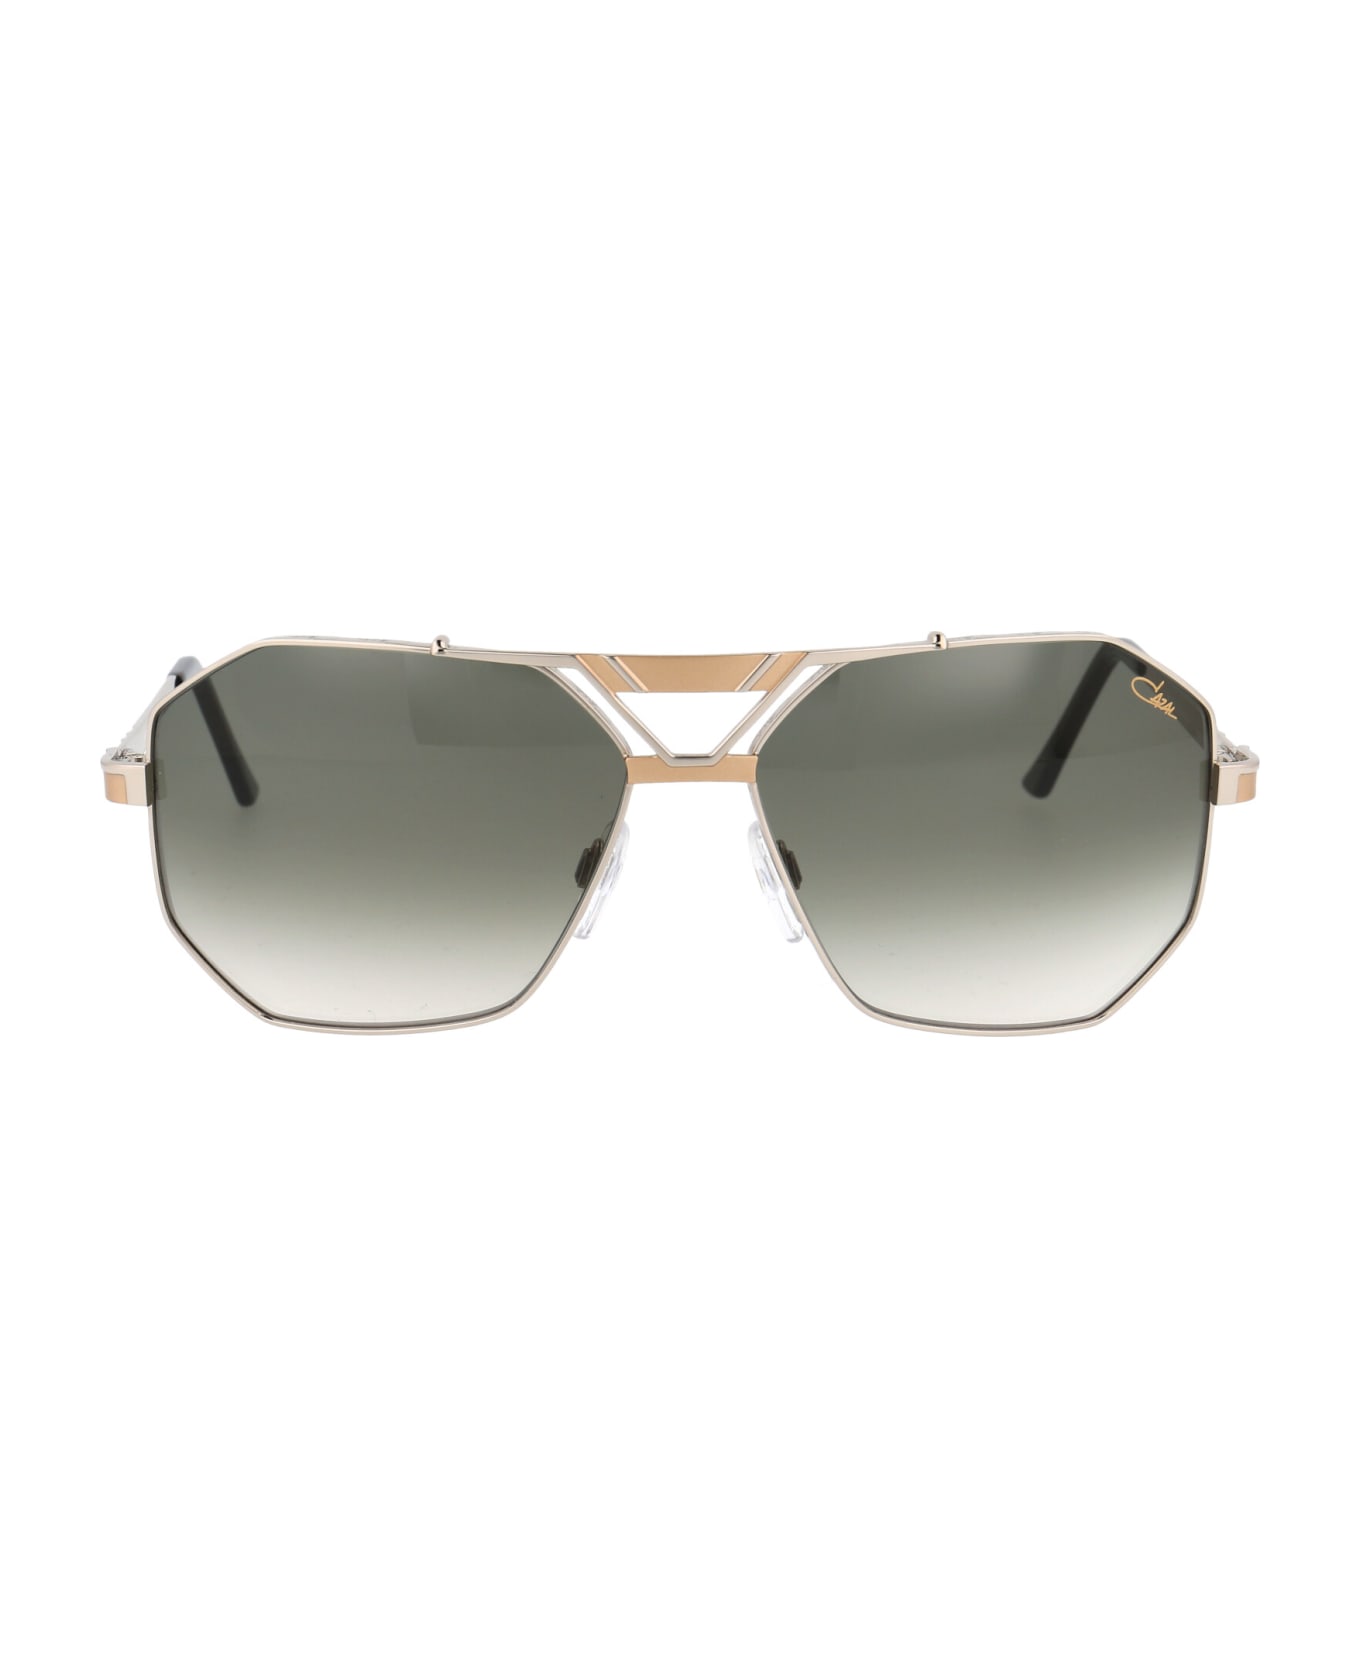 Cazal Mod. 9058 Sunglasses - 003 SILVER サングラス